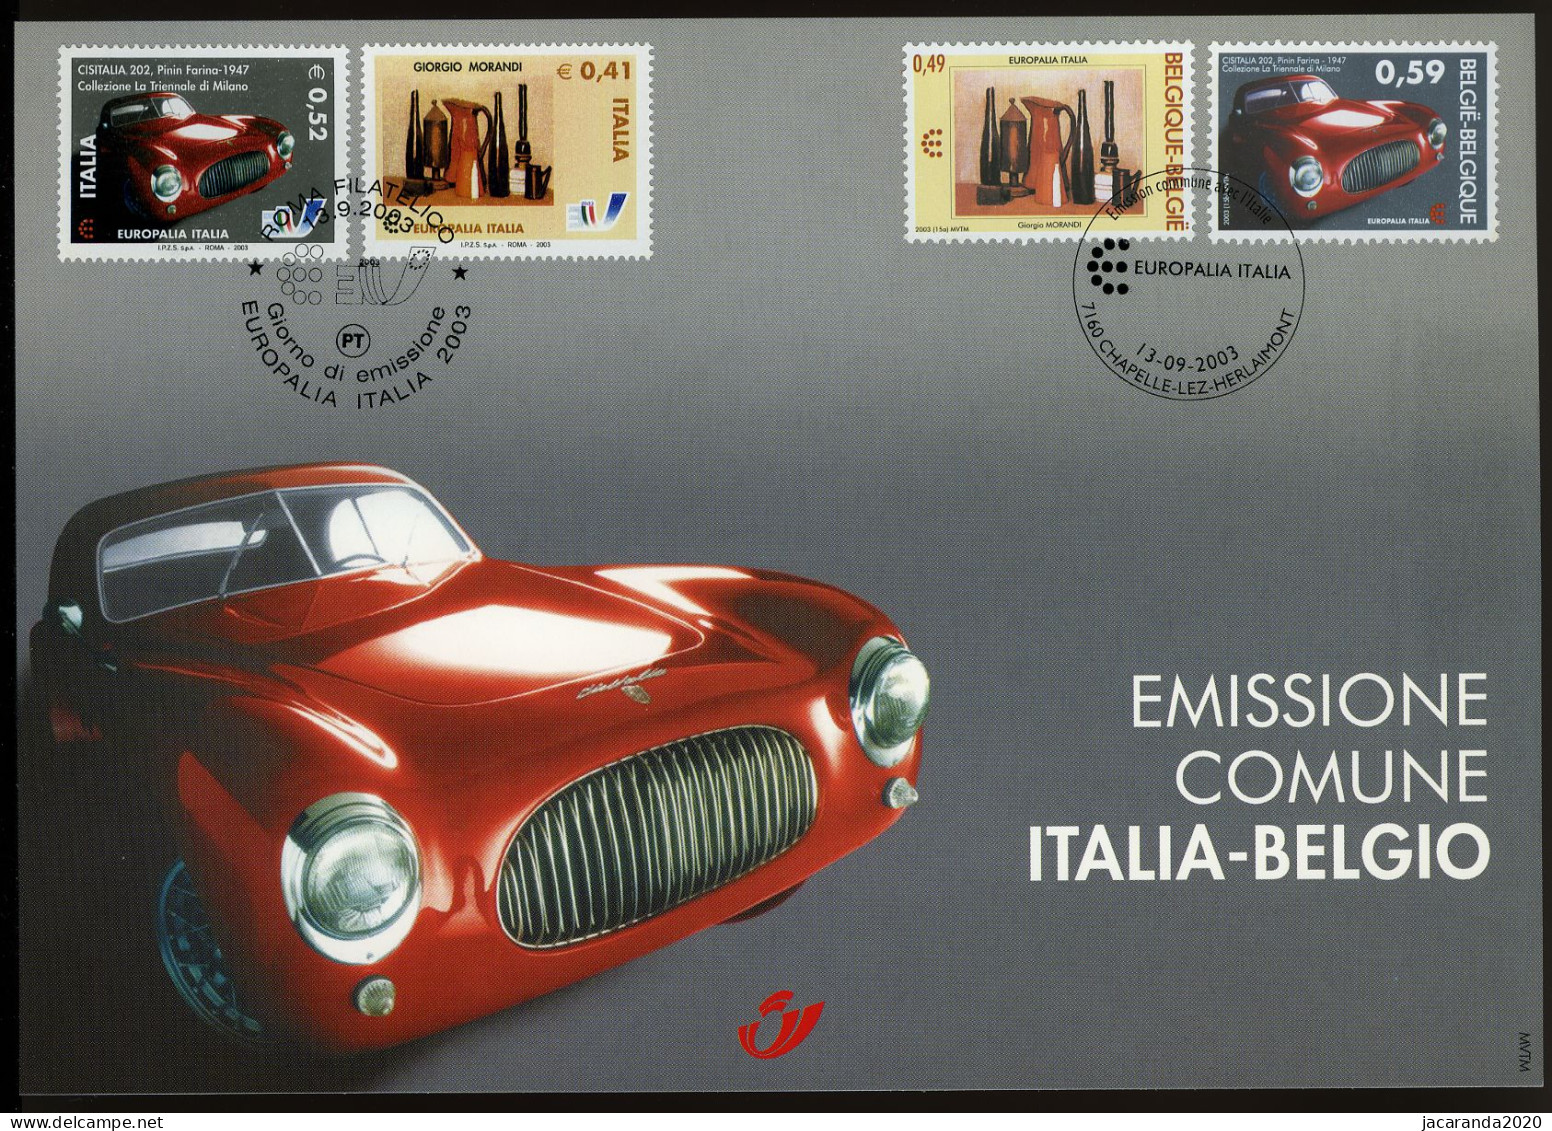 België 3205 HK - Europalia Italië - Giorgio Morandi - Pinin Farina - Gem. Uitgifte Met Italië - 2003 - Cartes Souvenir – Emissions Communes [HK]